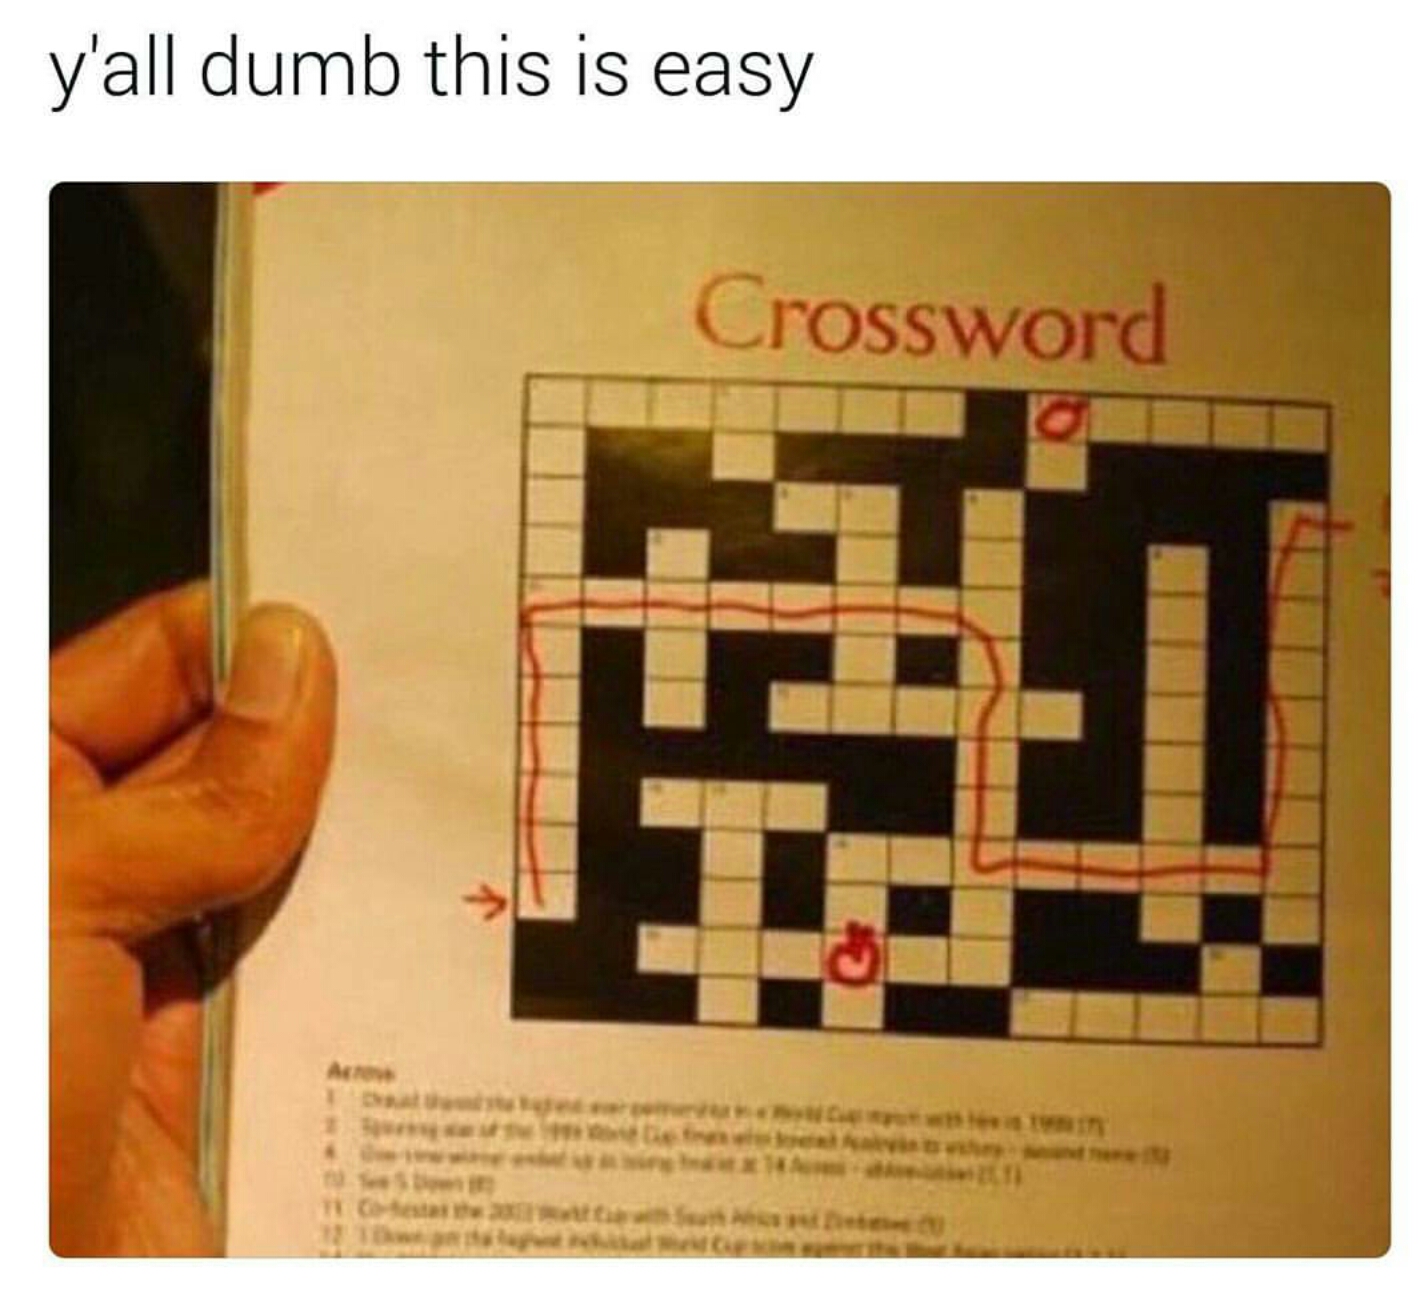 crossword funny - y'all dumb this is easy Crossword